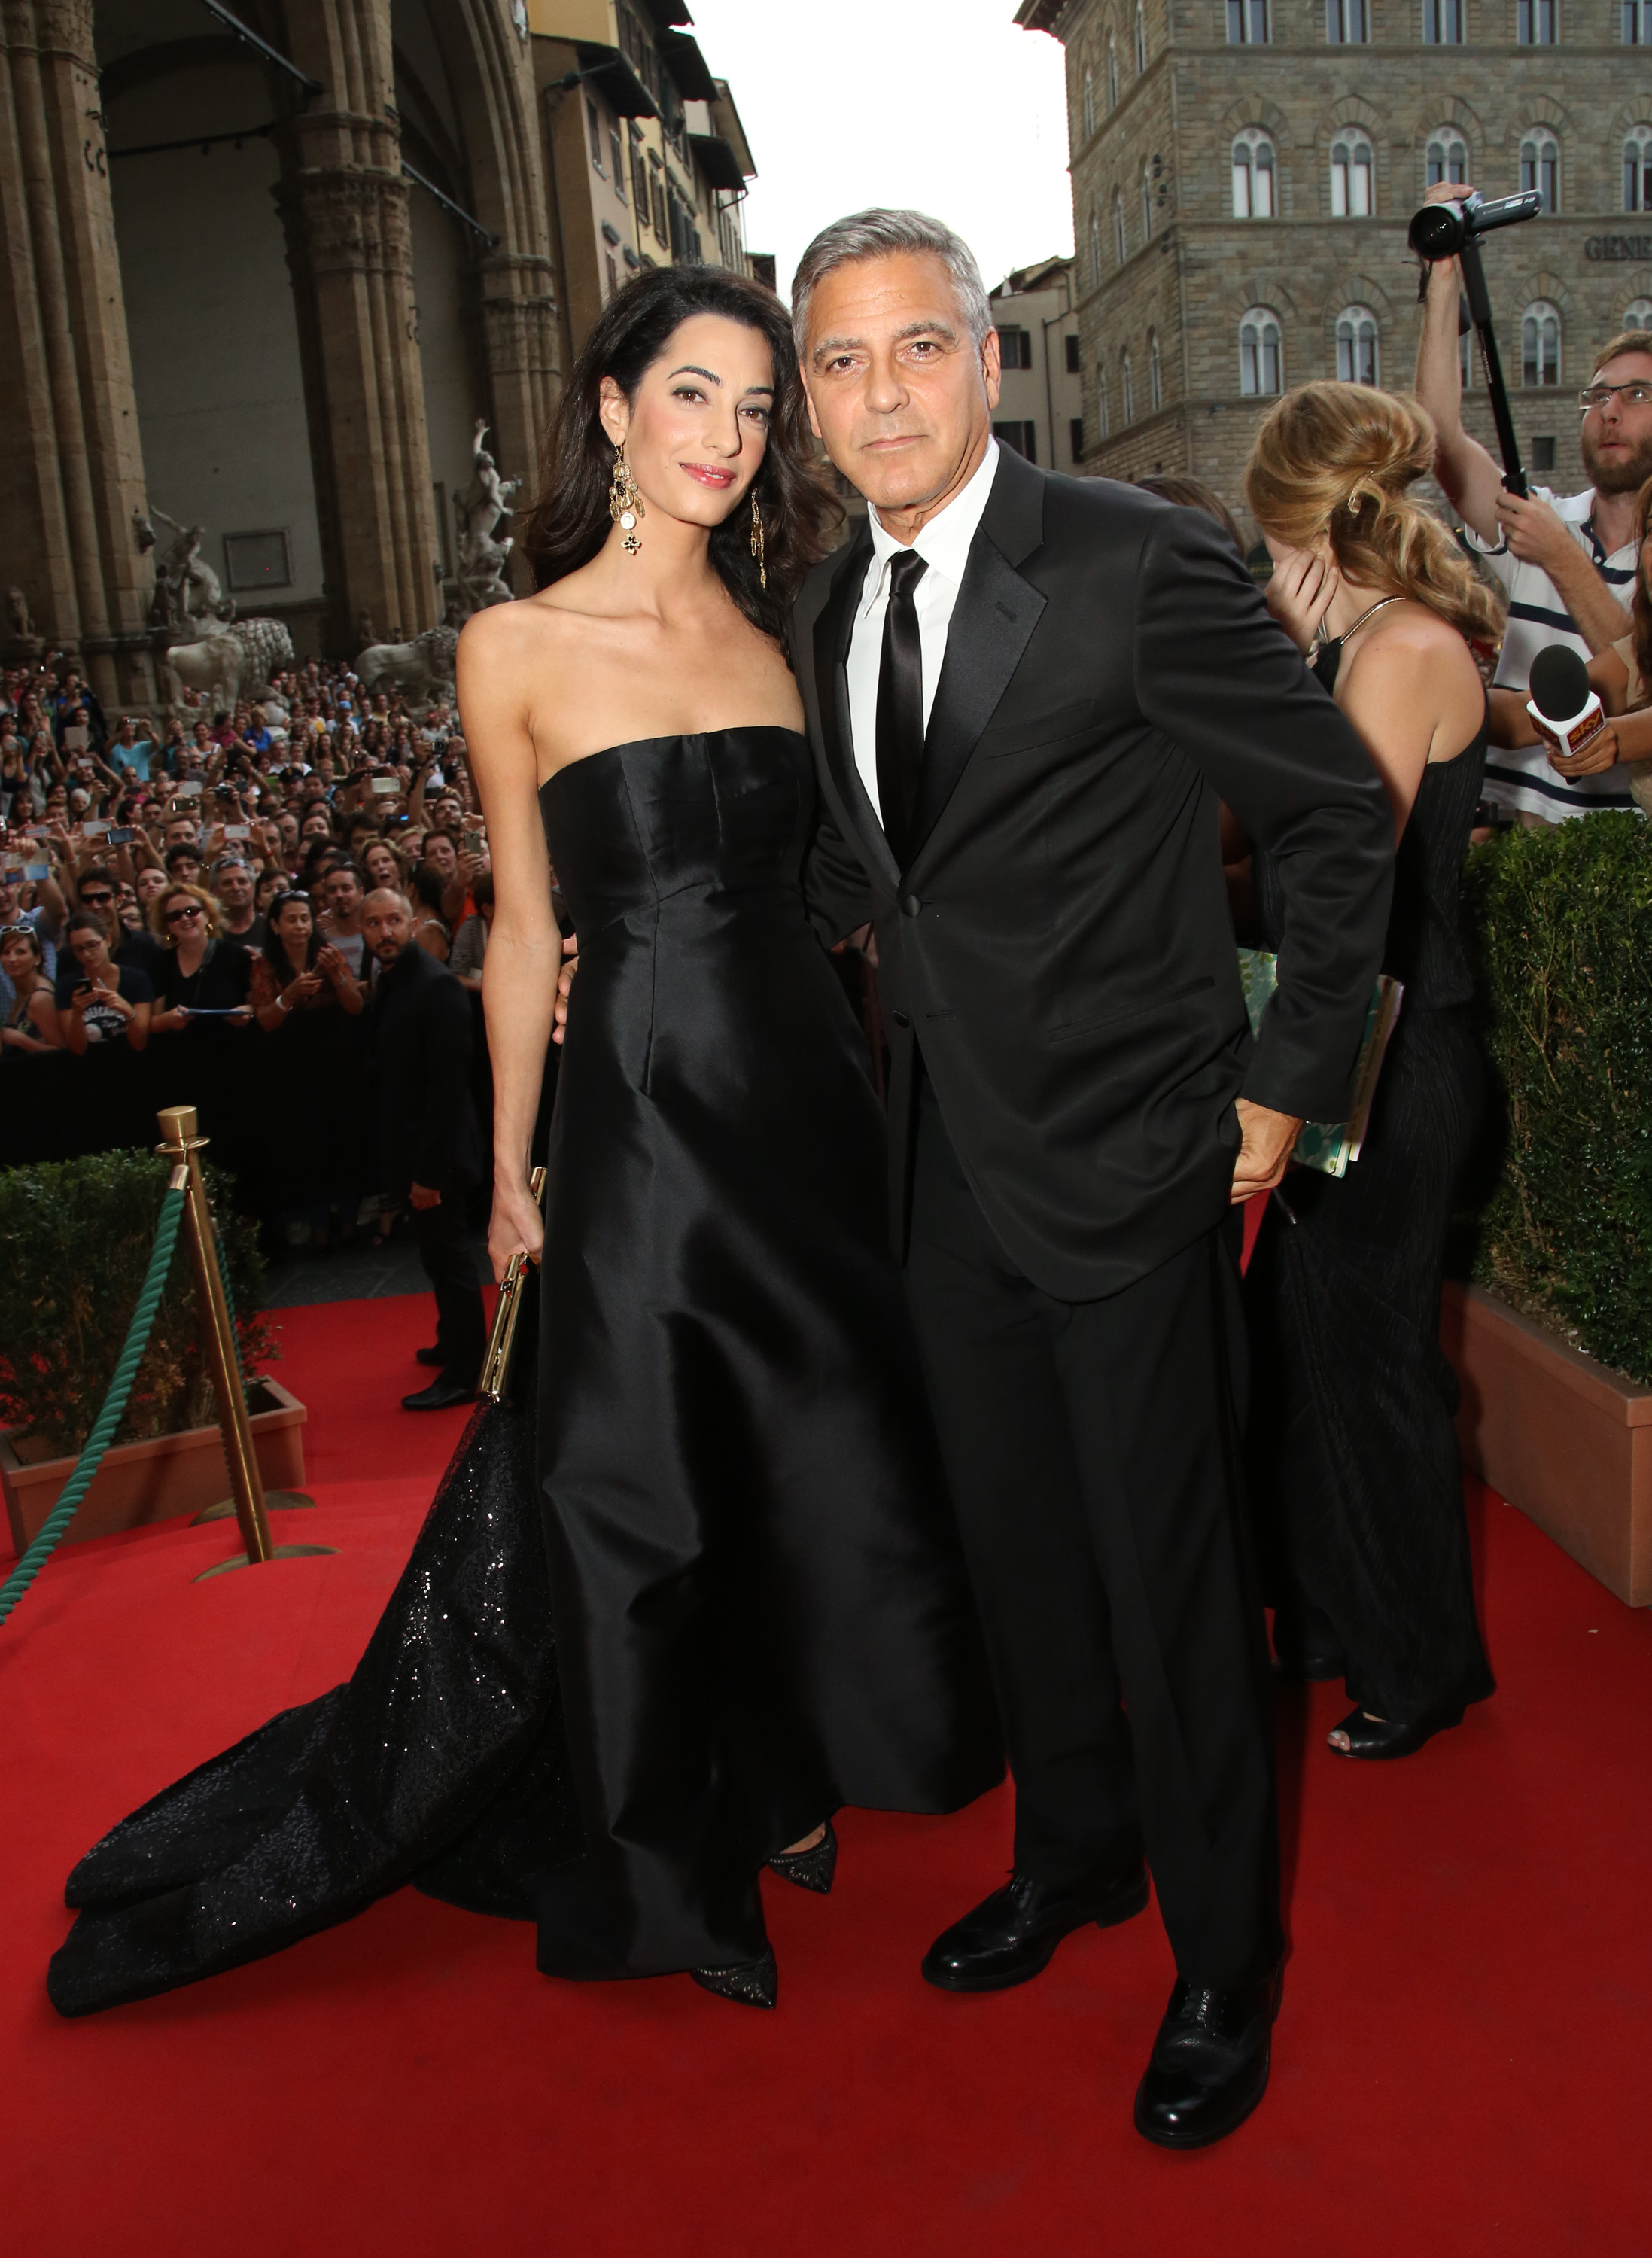 George Clooney couple